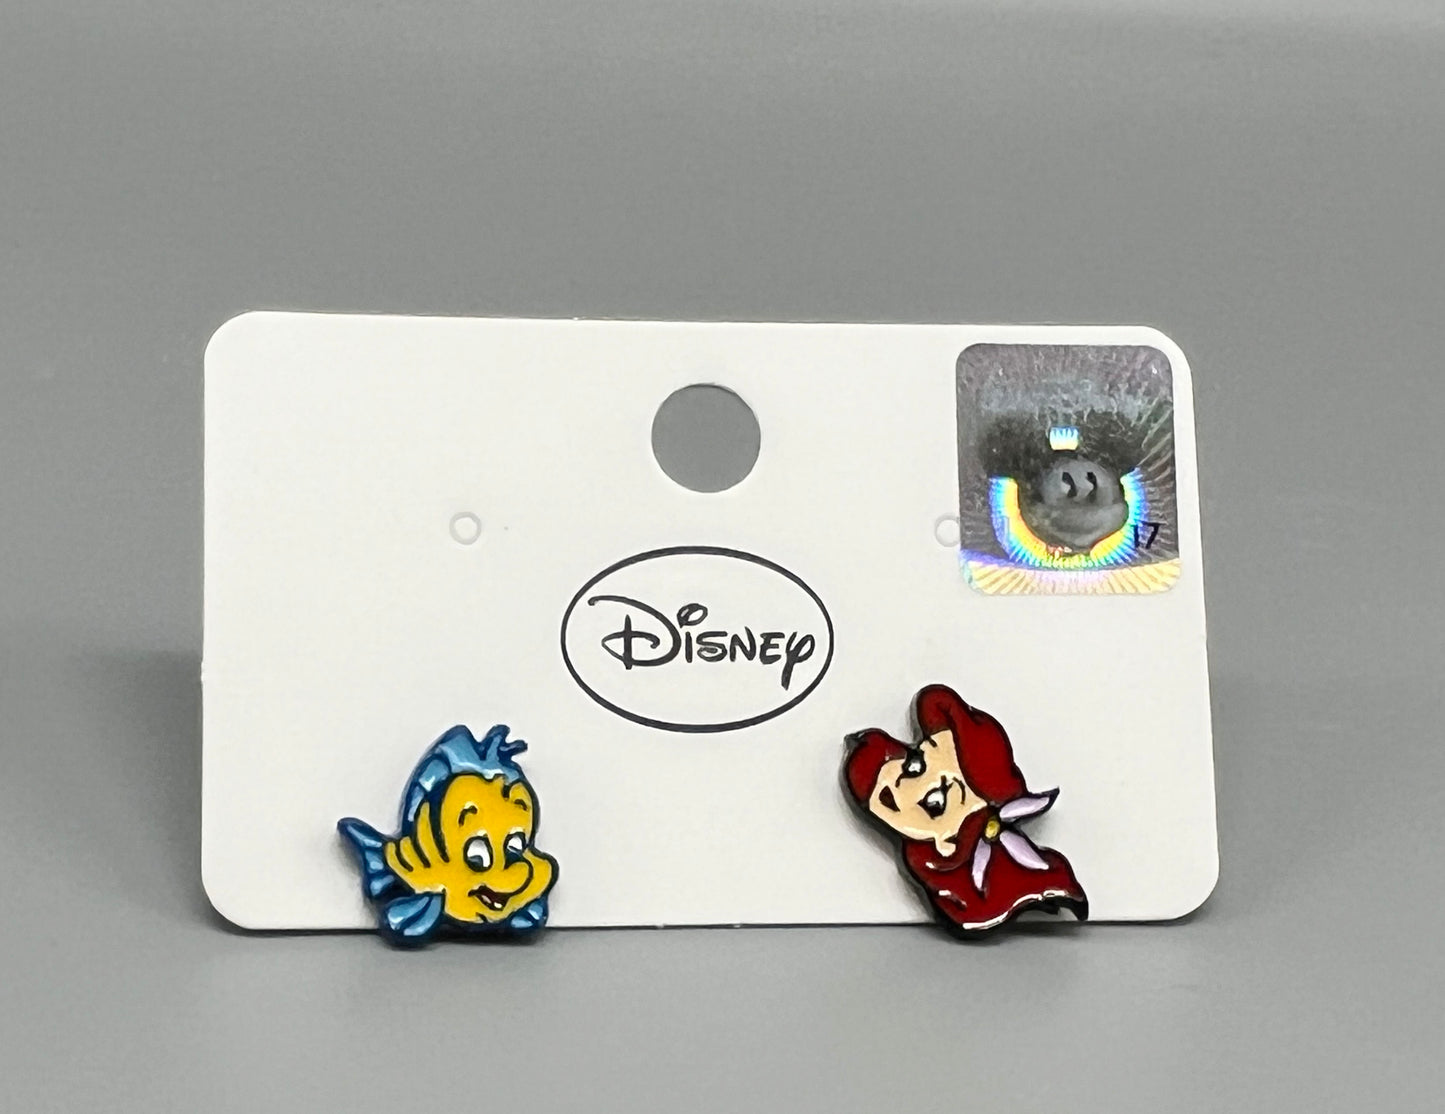 Disney-licensed Little mermaid and Alice in Wonderland earrings, Alice and Cheshire cat stud earrings